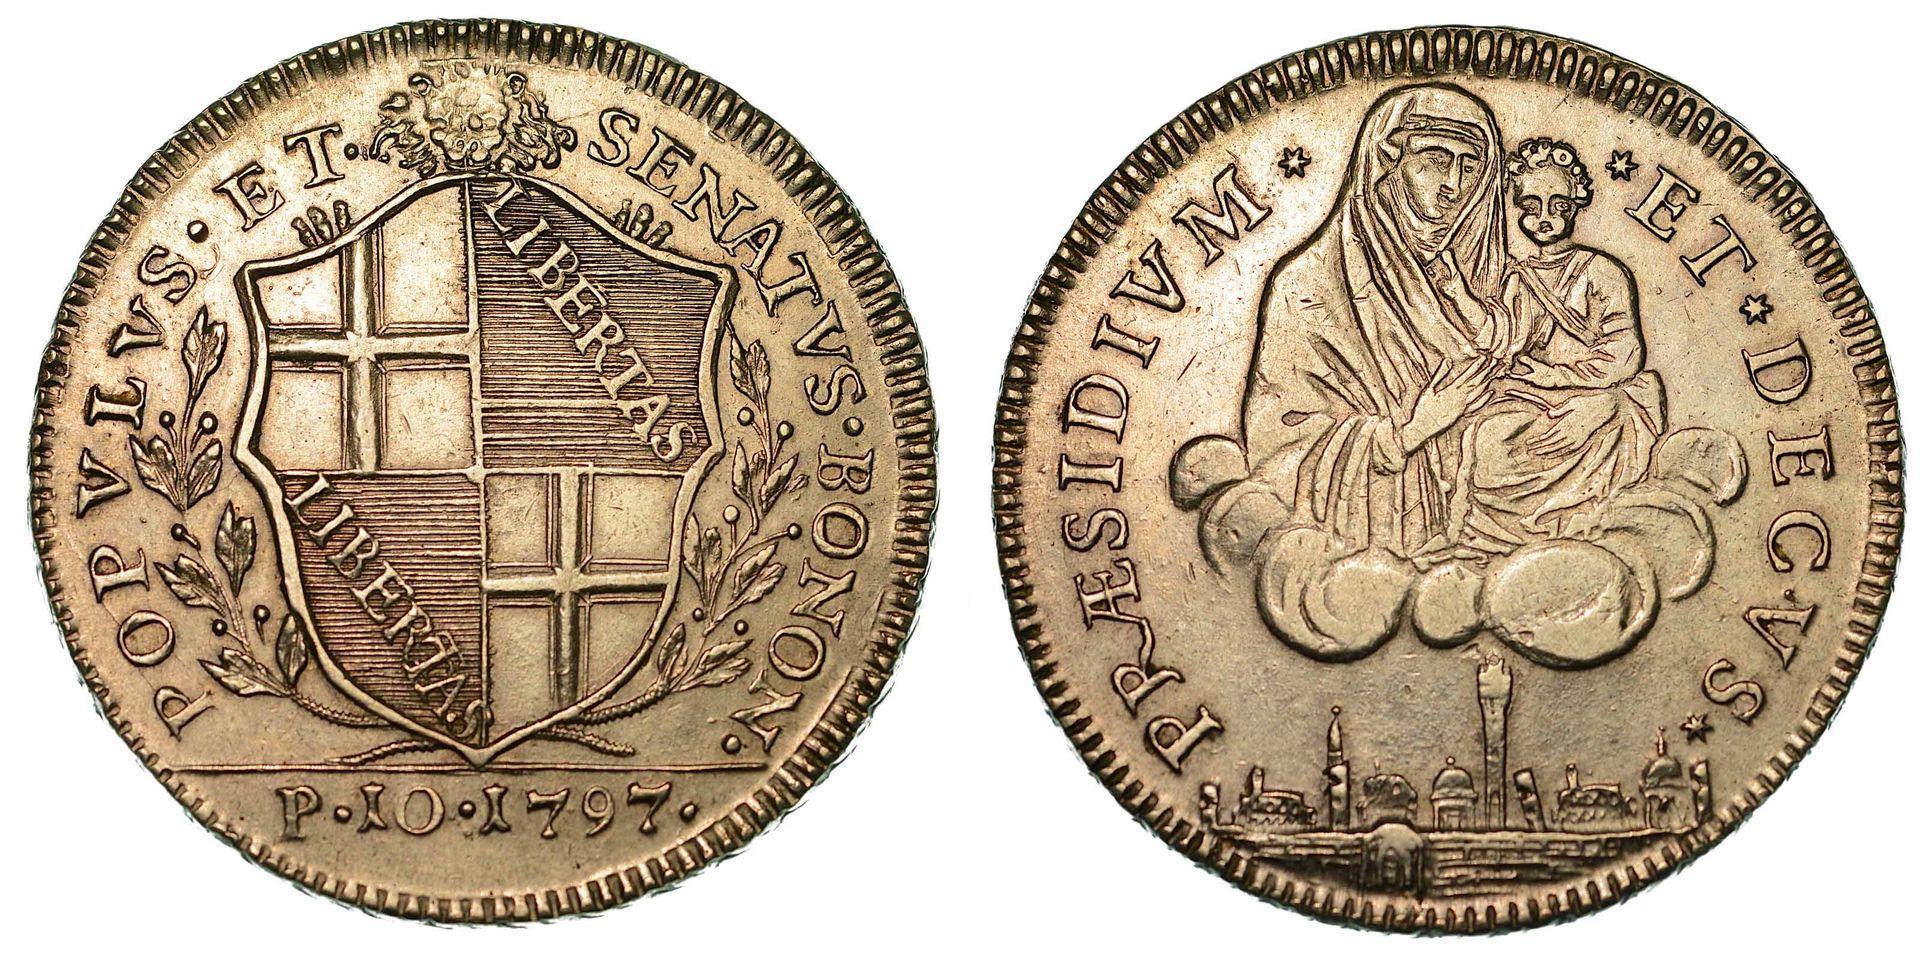 Monete di zecche italiane 博洛尼亚。人民政府，1796-1797。10 Paoli 1797的盾牌。
盾牌在两个月桂树枝之间，上面有一&hellip;